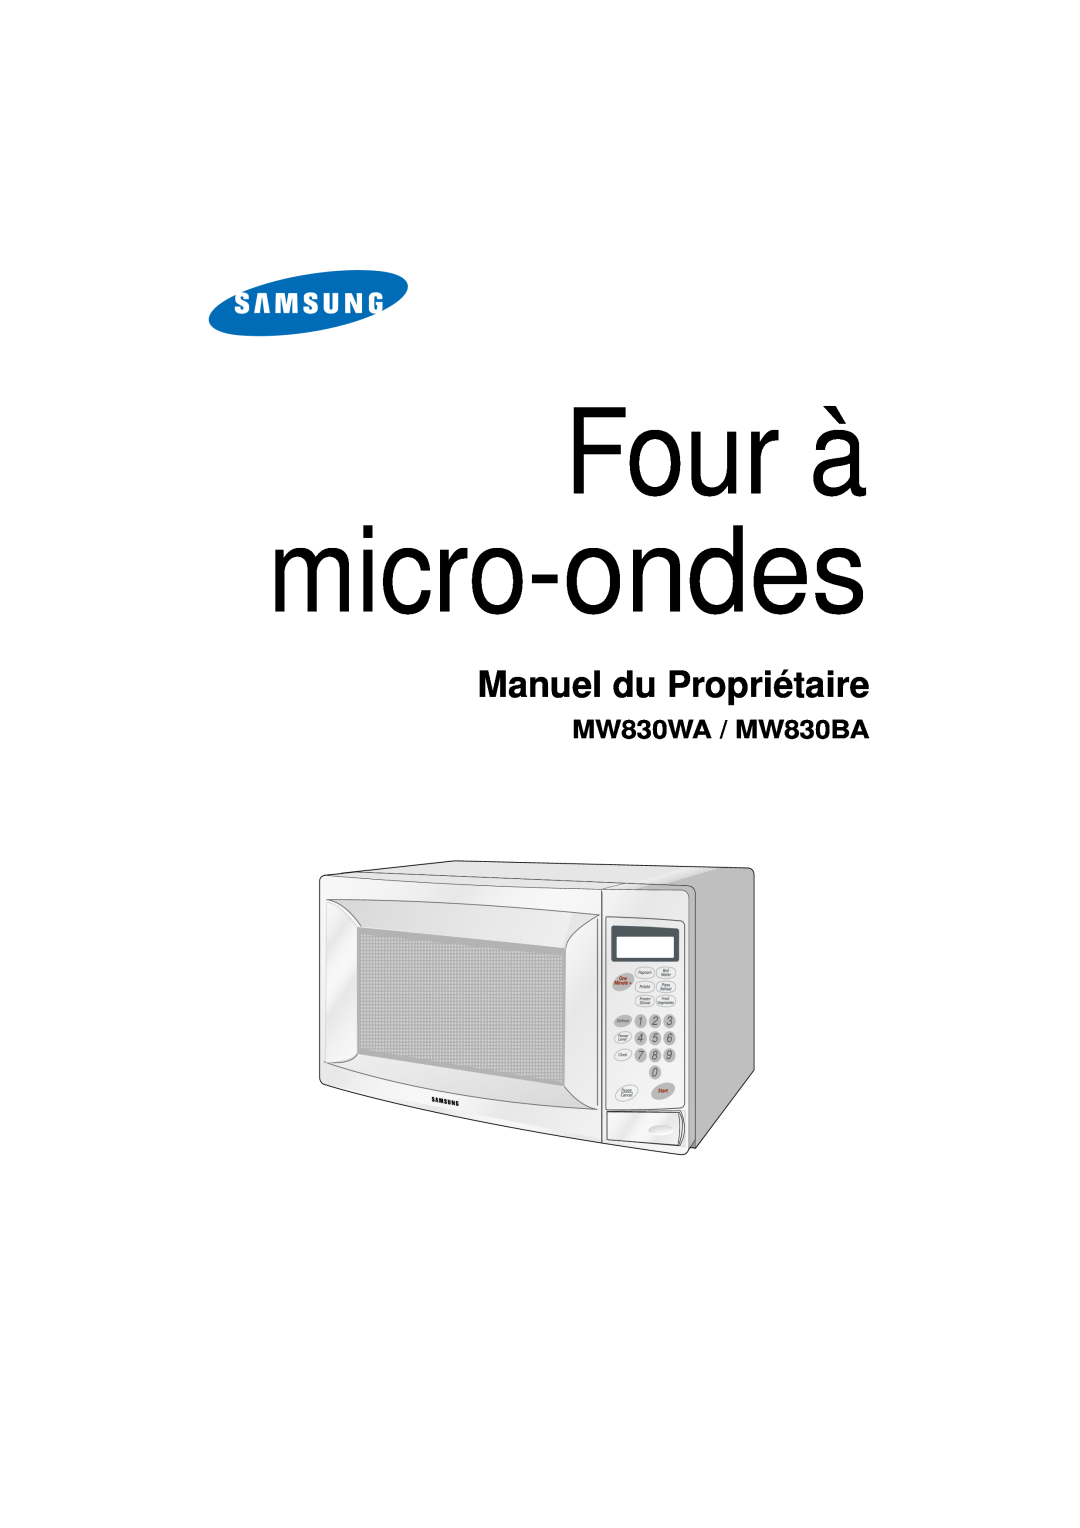 Samsung manual Manuel du Propriétaire, Four à micro-ondes, MW830WA / MW830BA, 1 2 4 5 7 8 9 